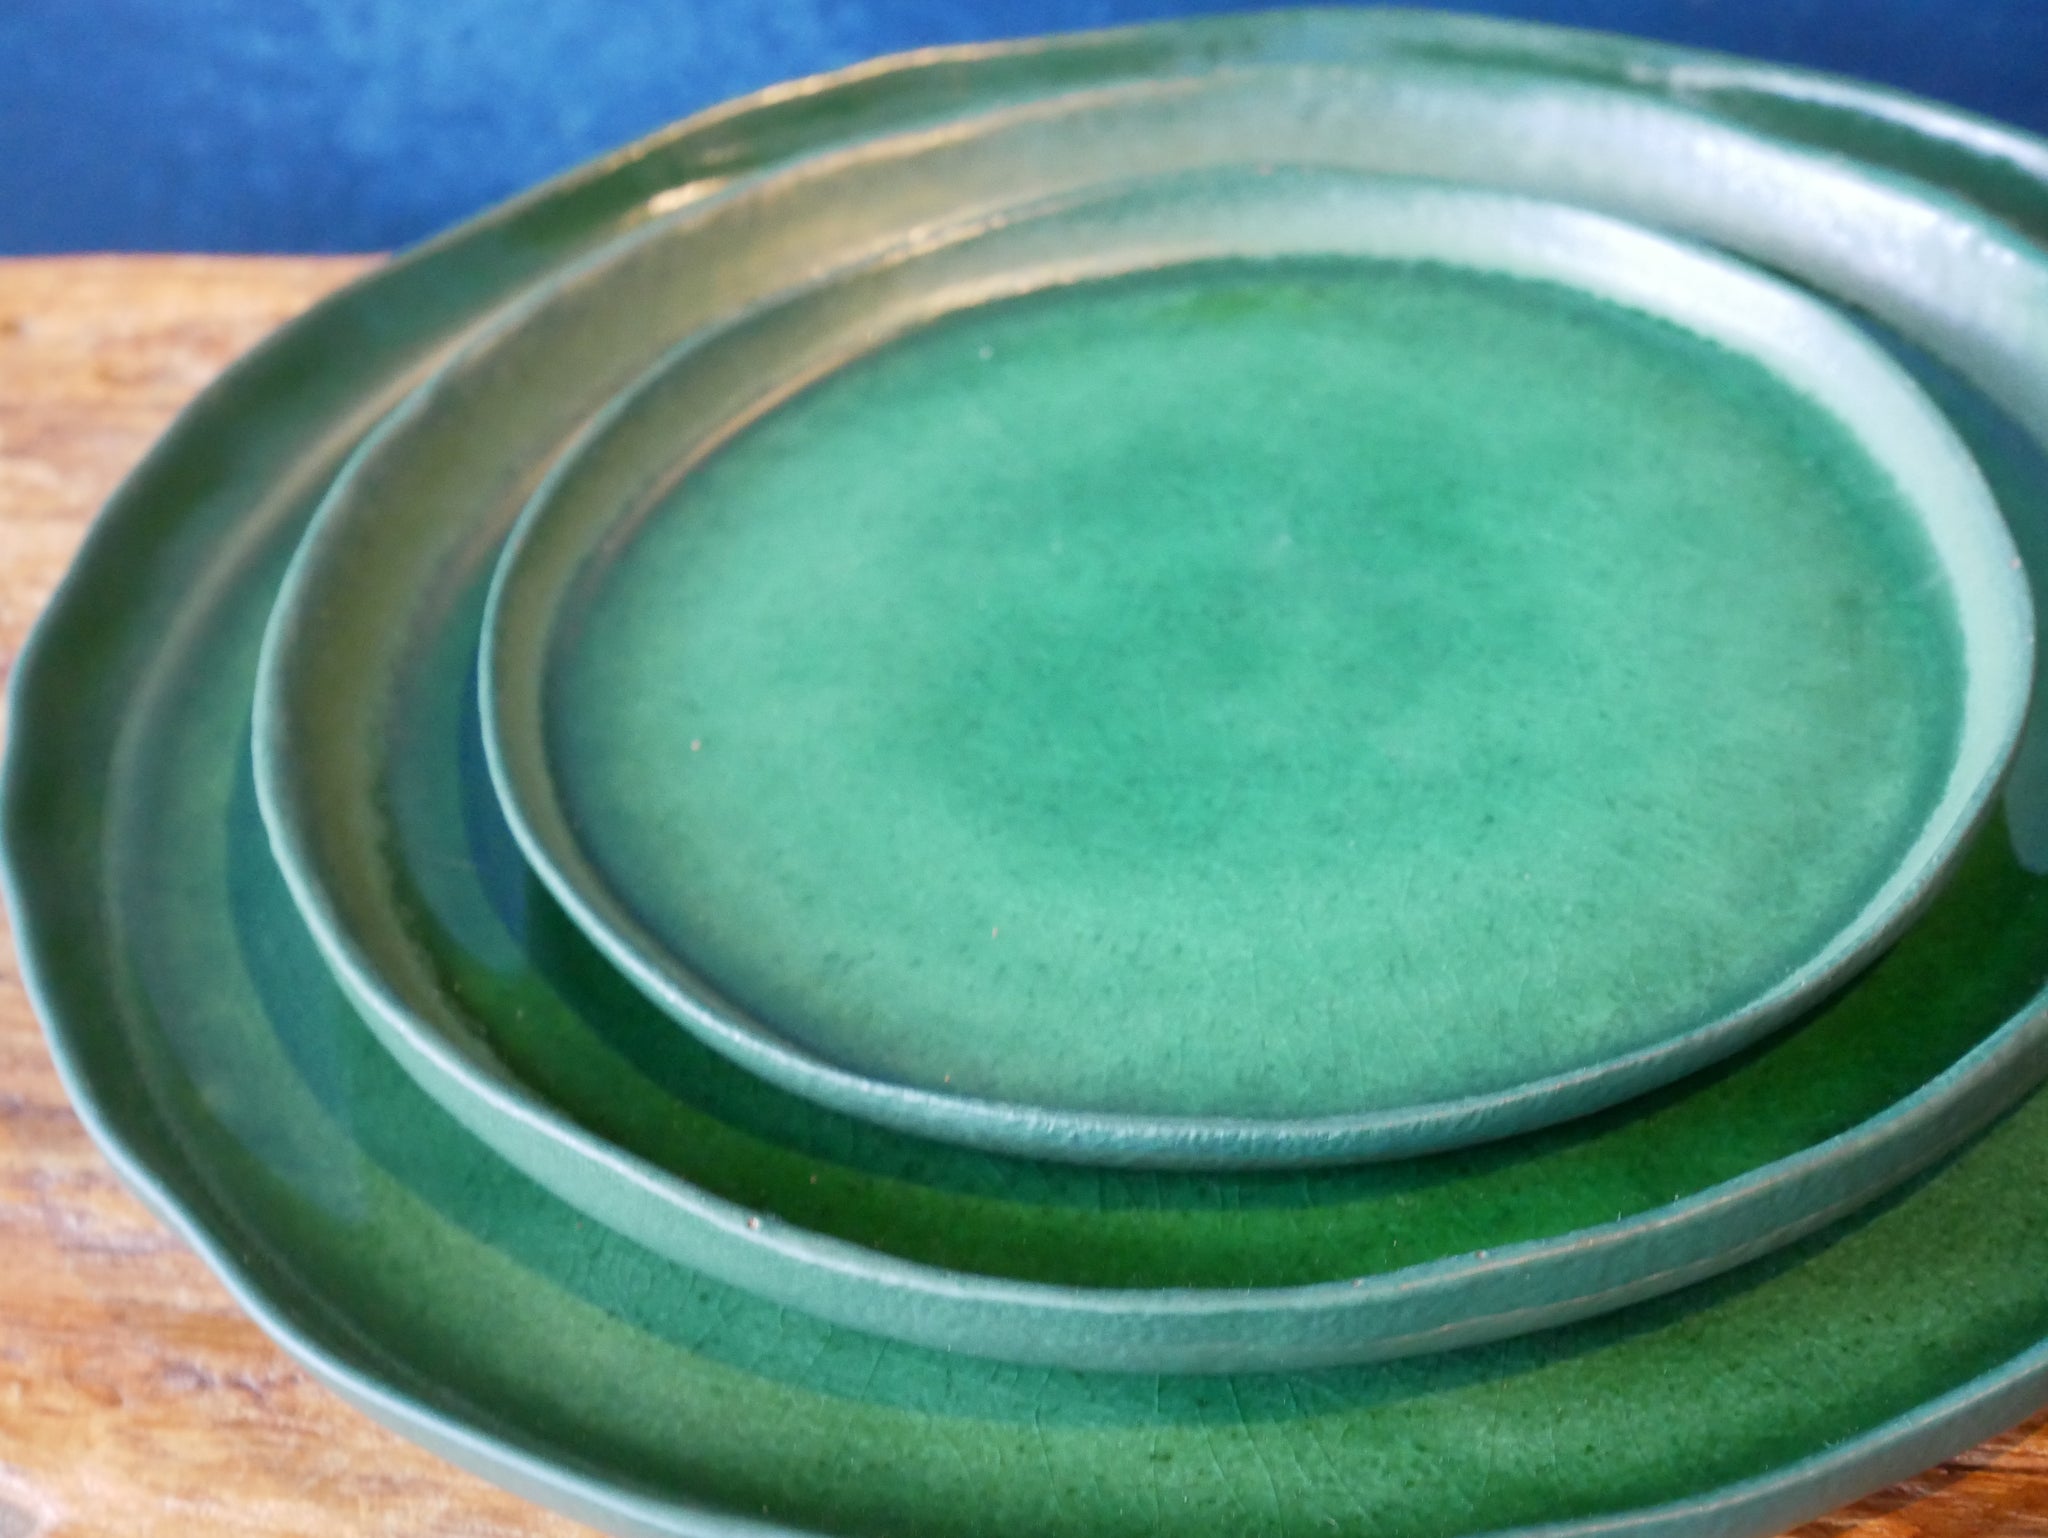 Emerald Celadon Plate - Three Sizes